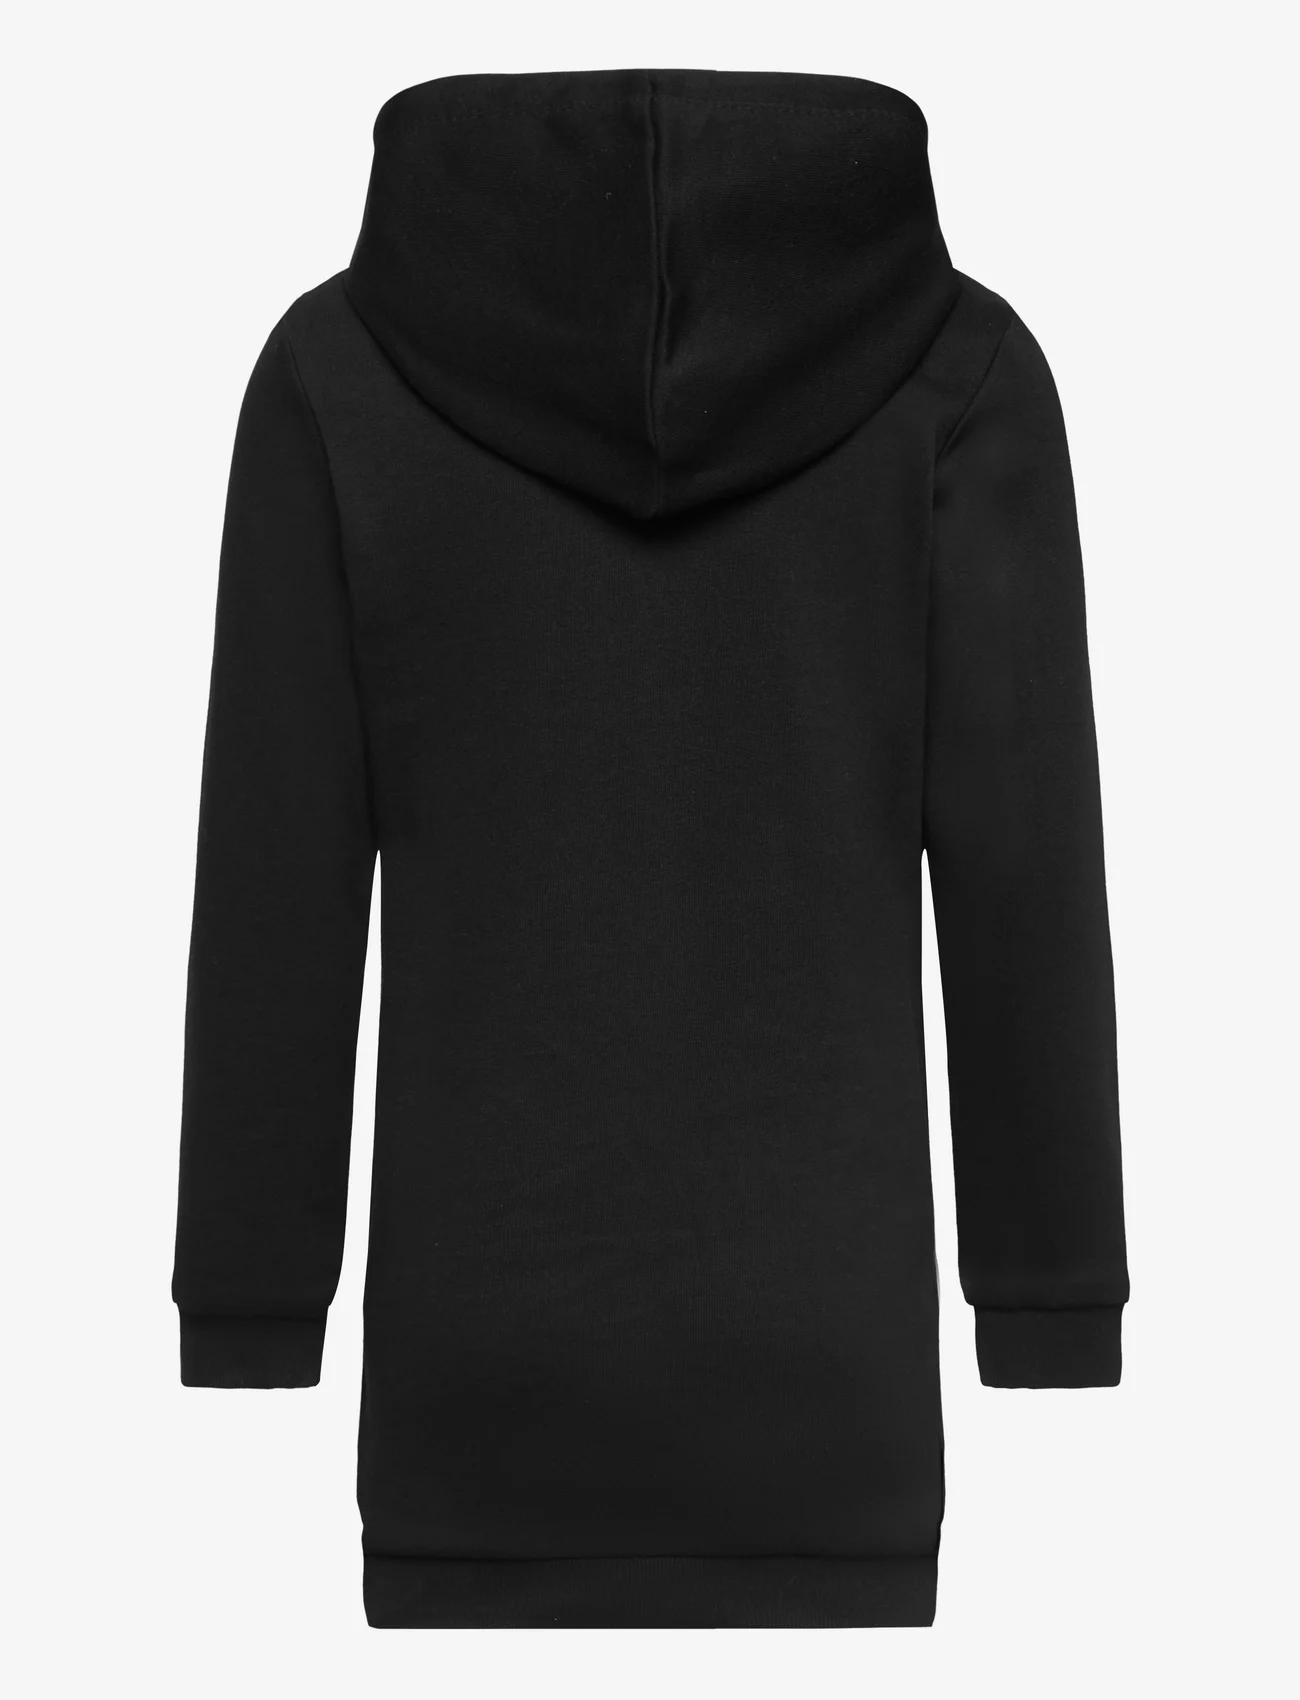 PUMA - Hooded Dress G - langærmede hverdagskjoler - puma black - 1